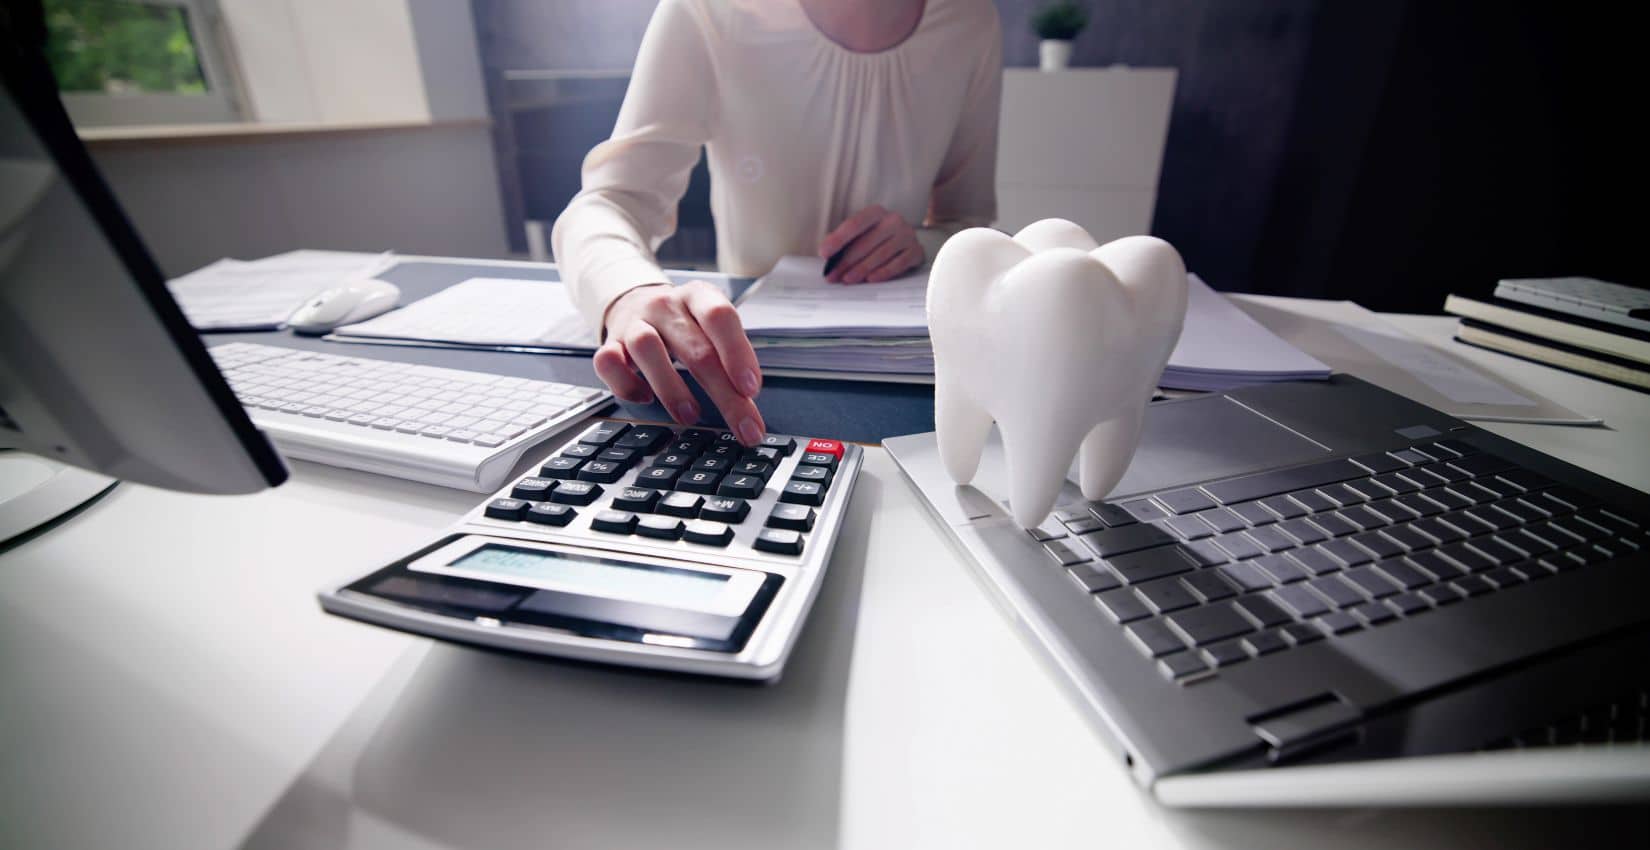 Dental CPA working on dental office tax return